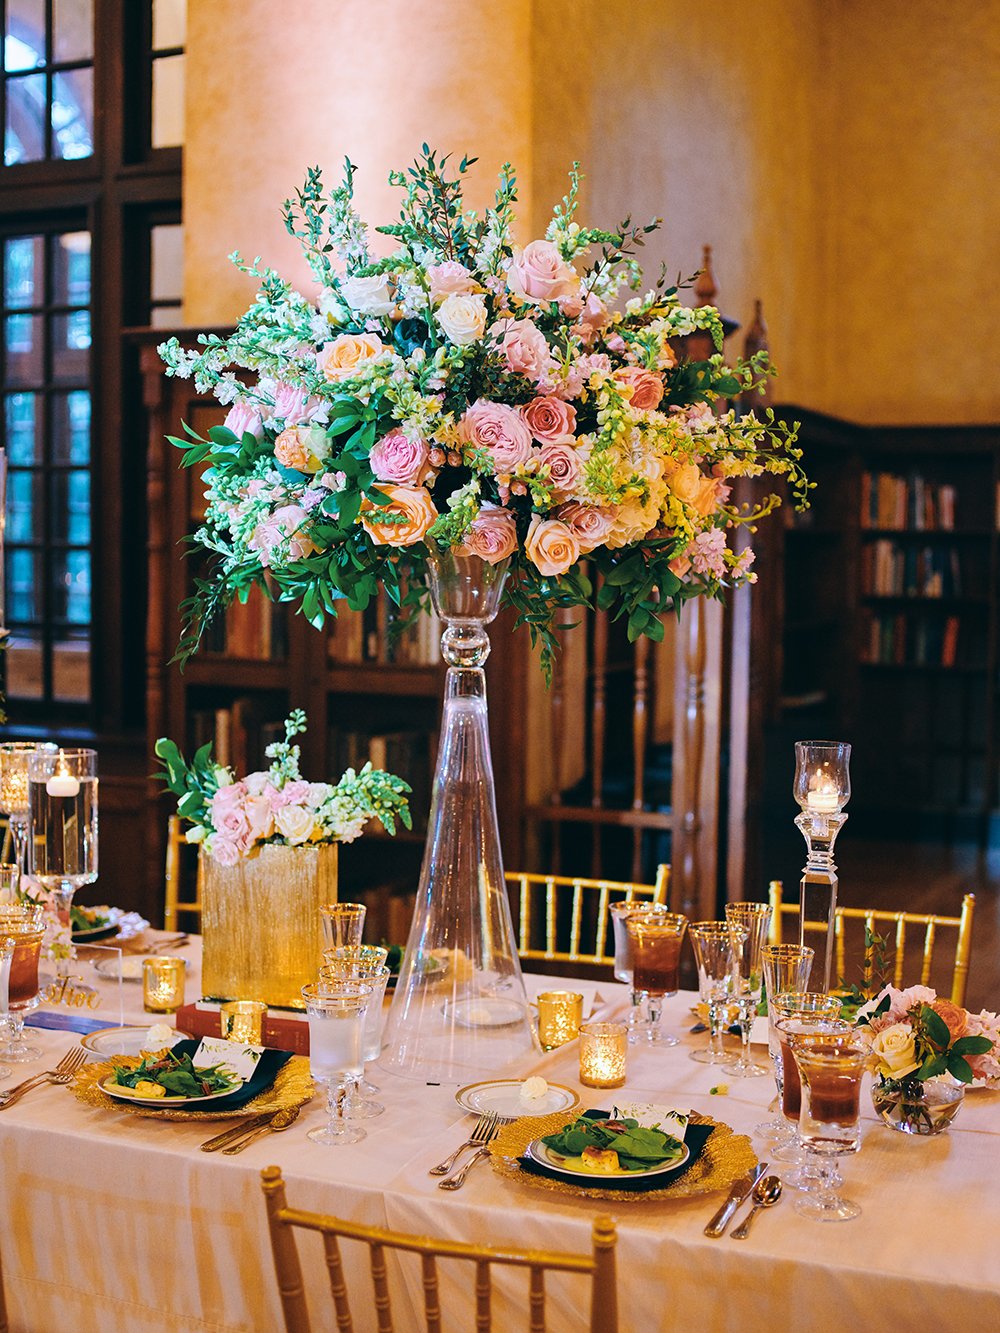 centerpiece for wedding reception - large vase with floral arrangement